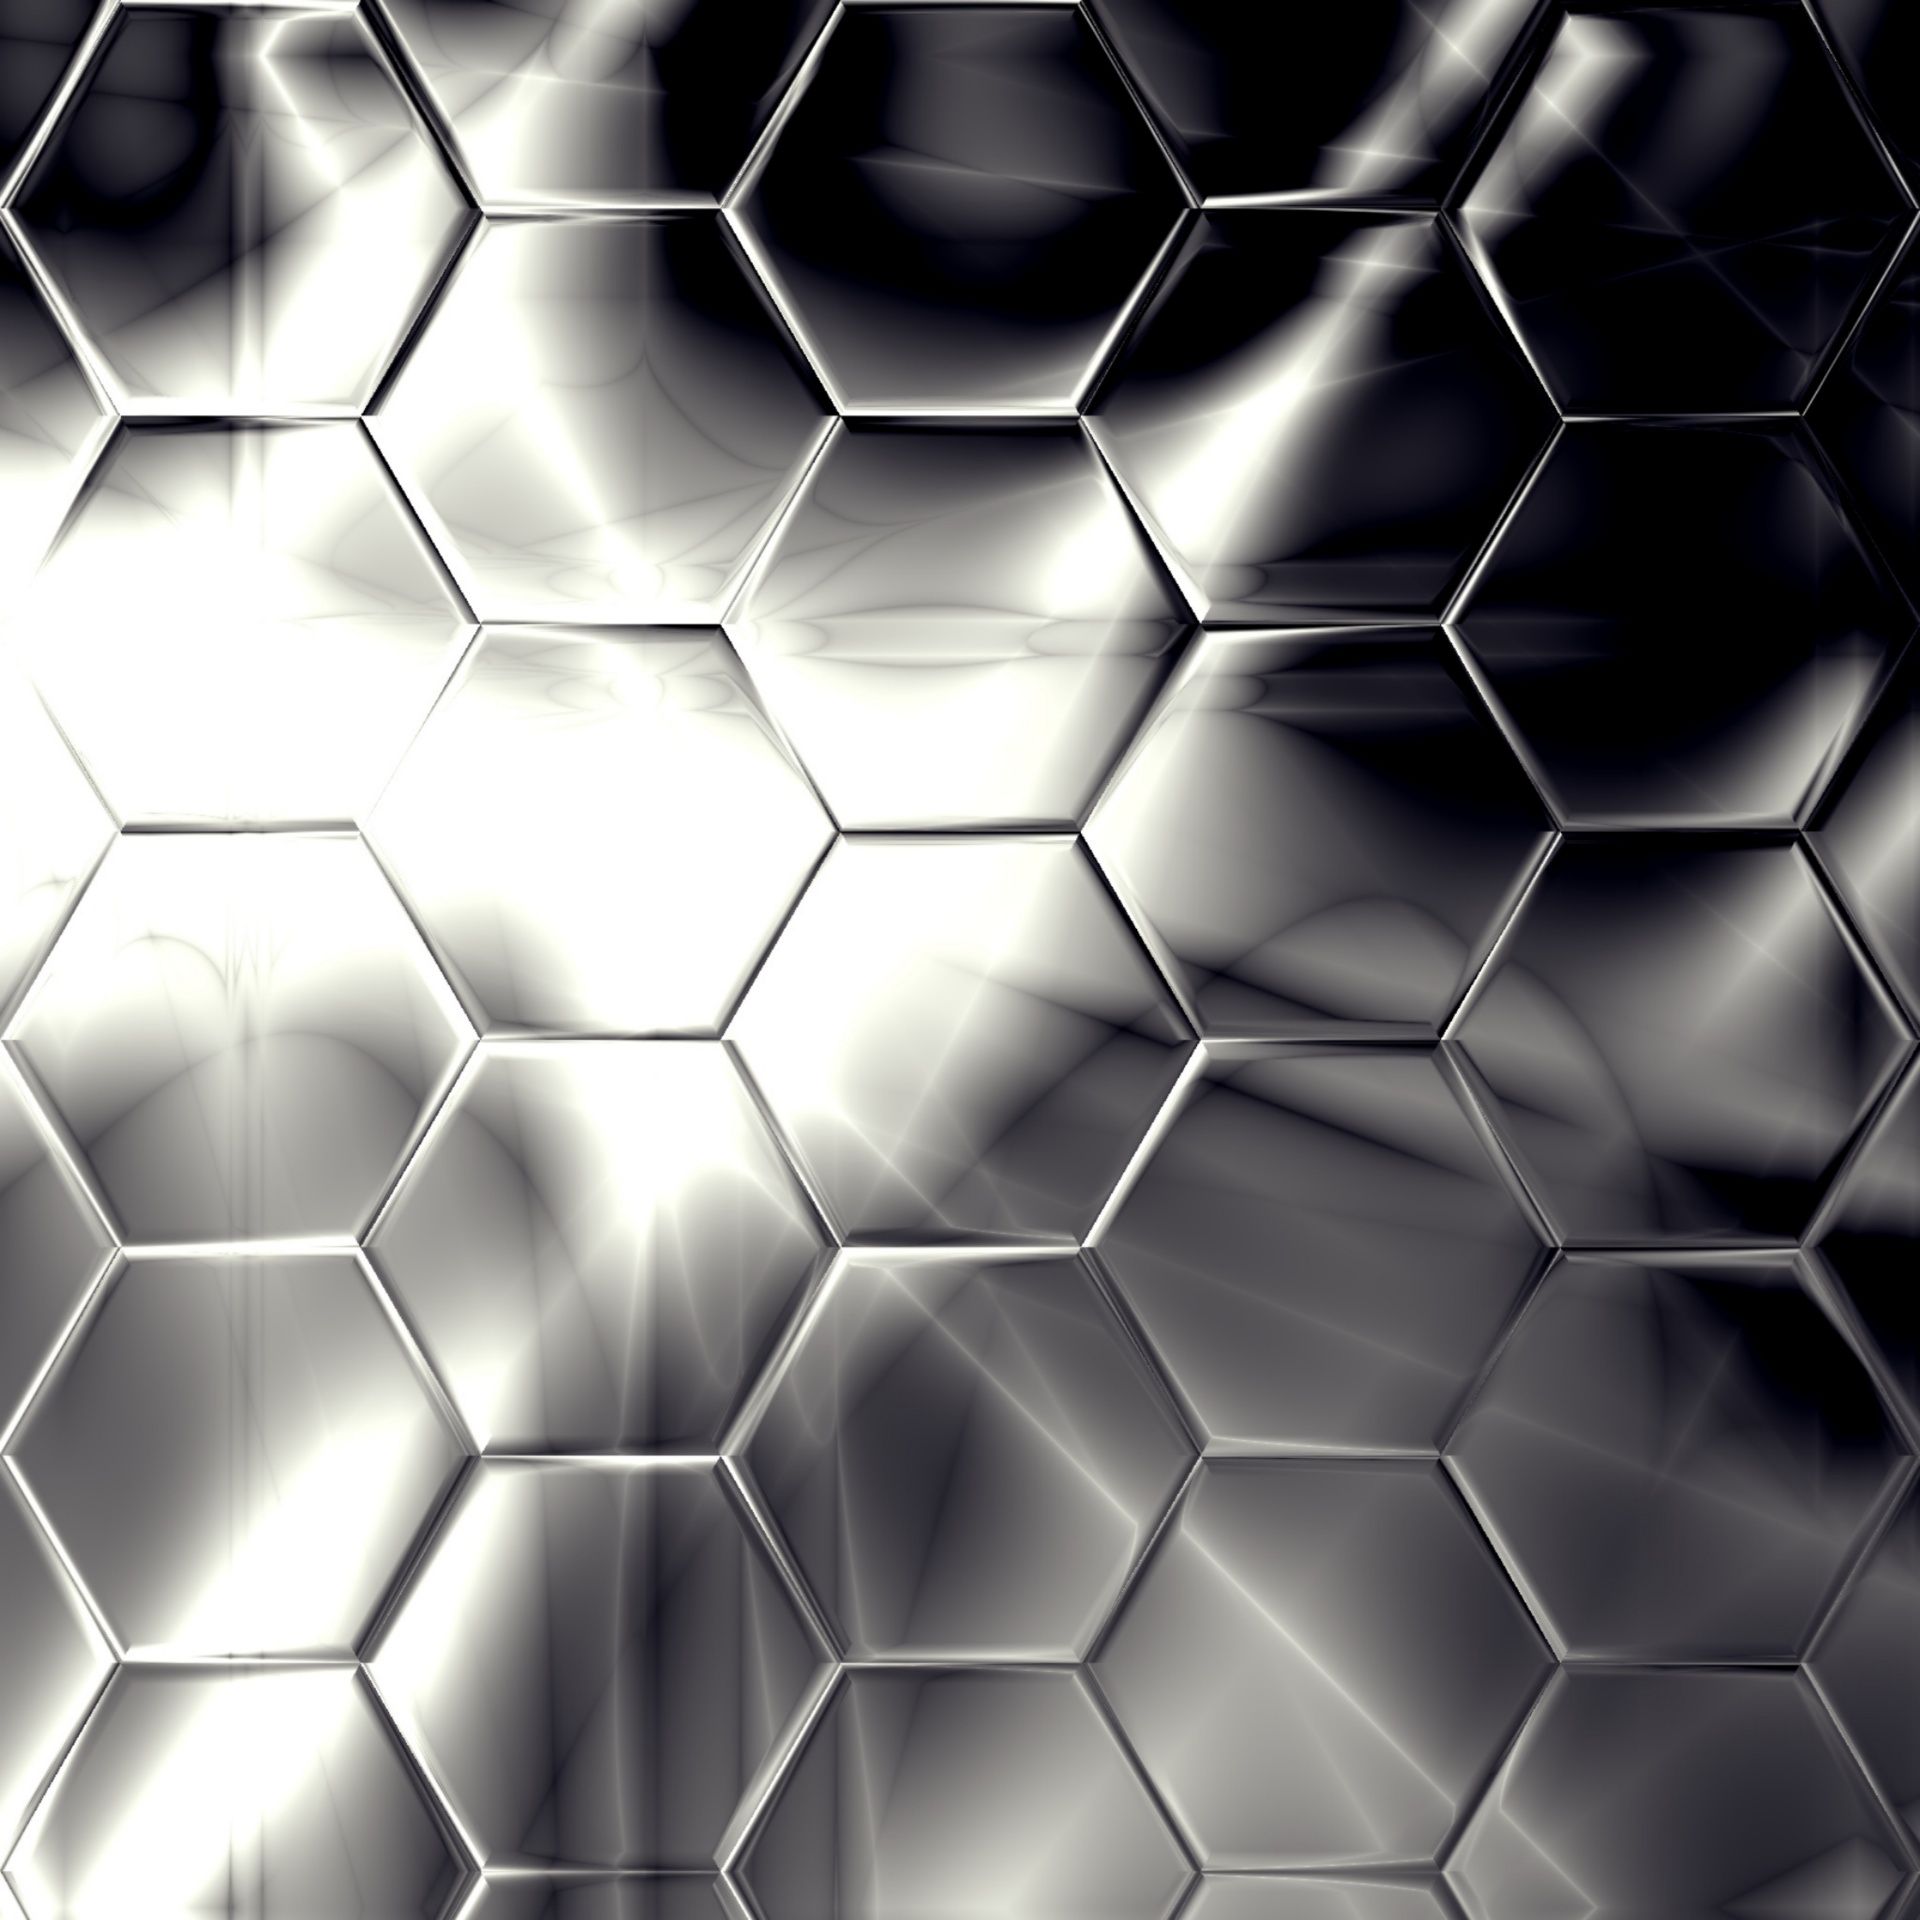 Wallpaper, black, white, hex, hexagonal .needpix.com